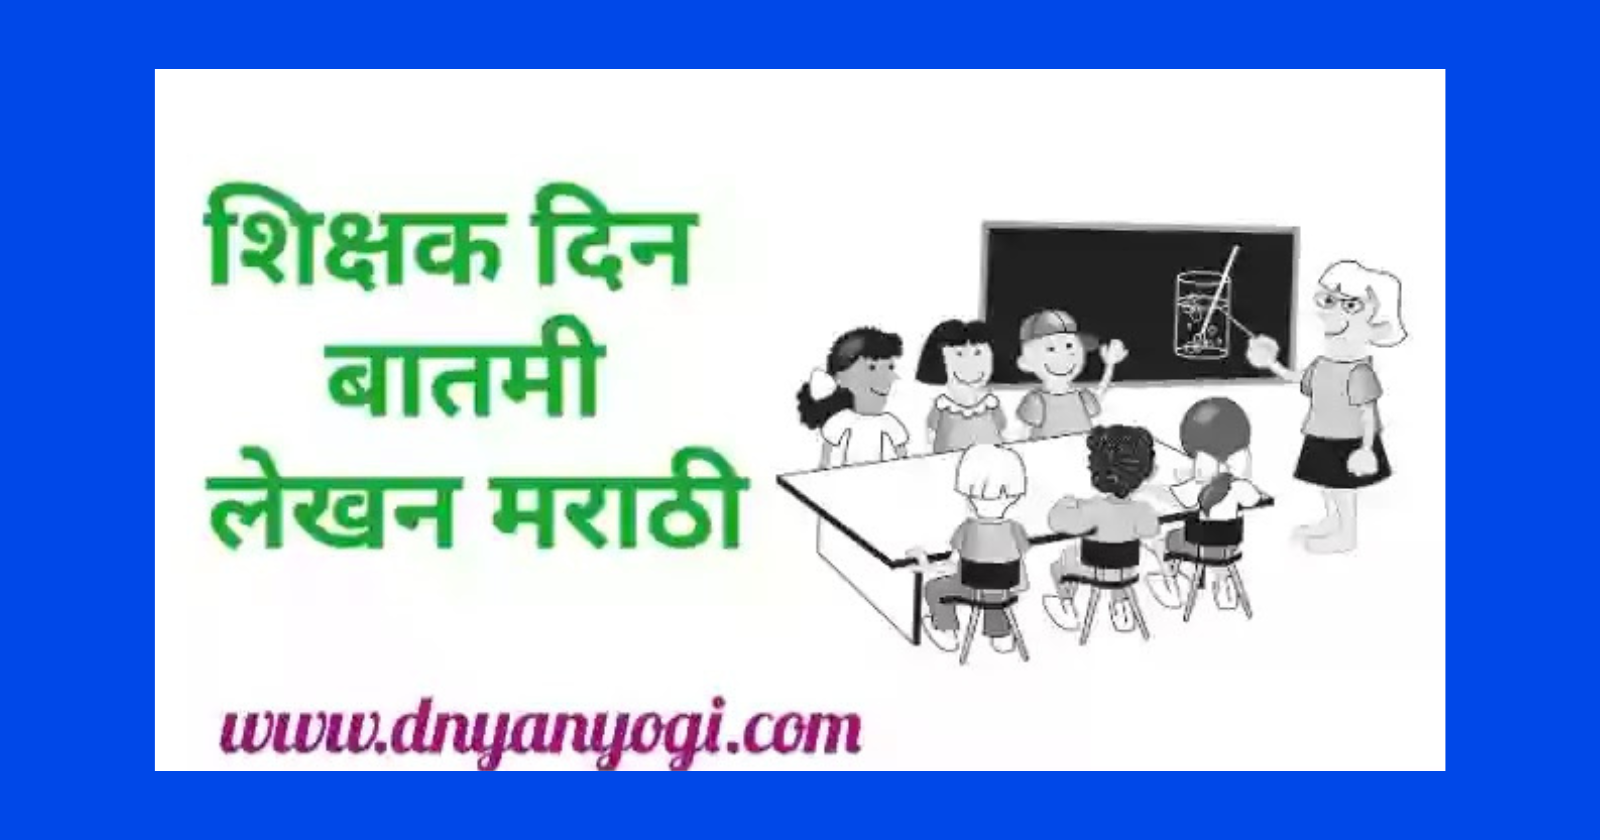 Teacher's Day news writing in Marathi